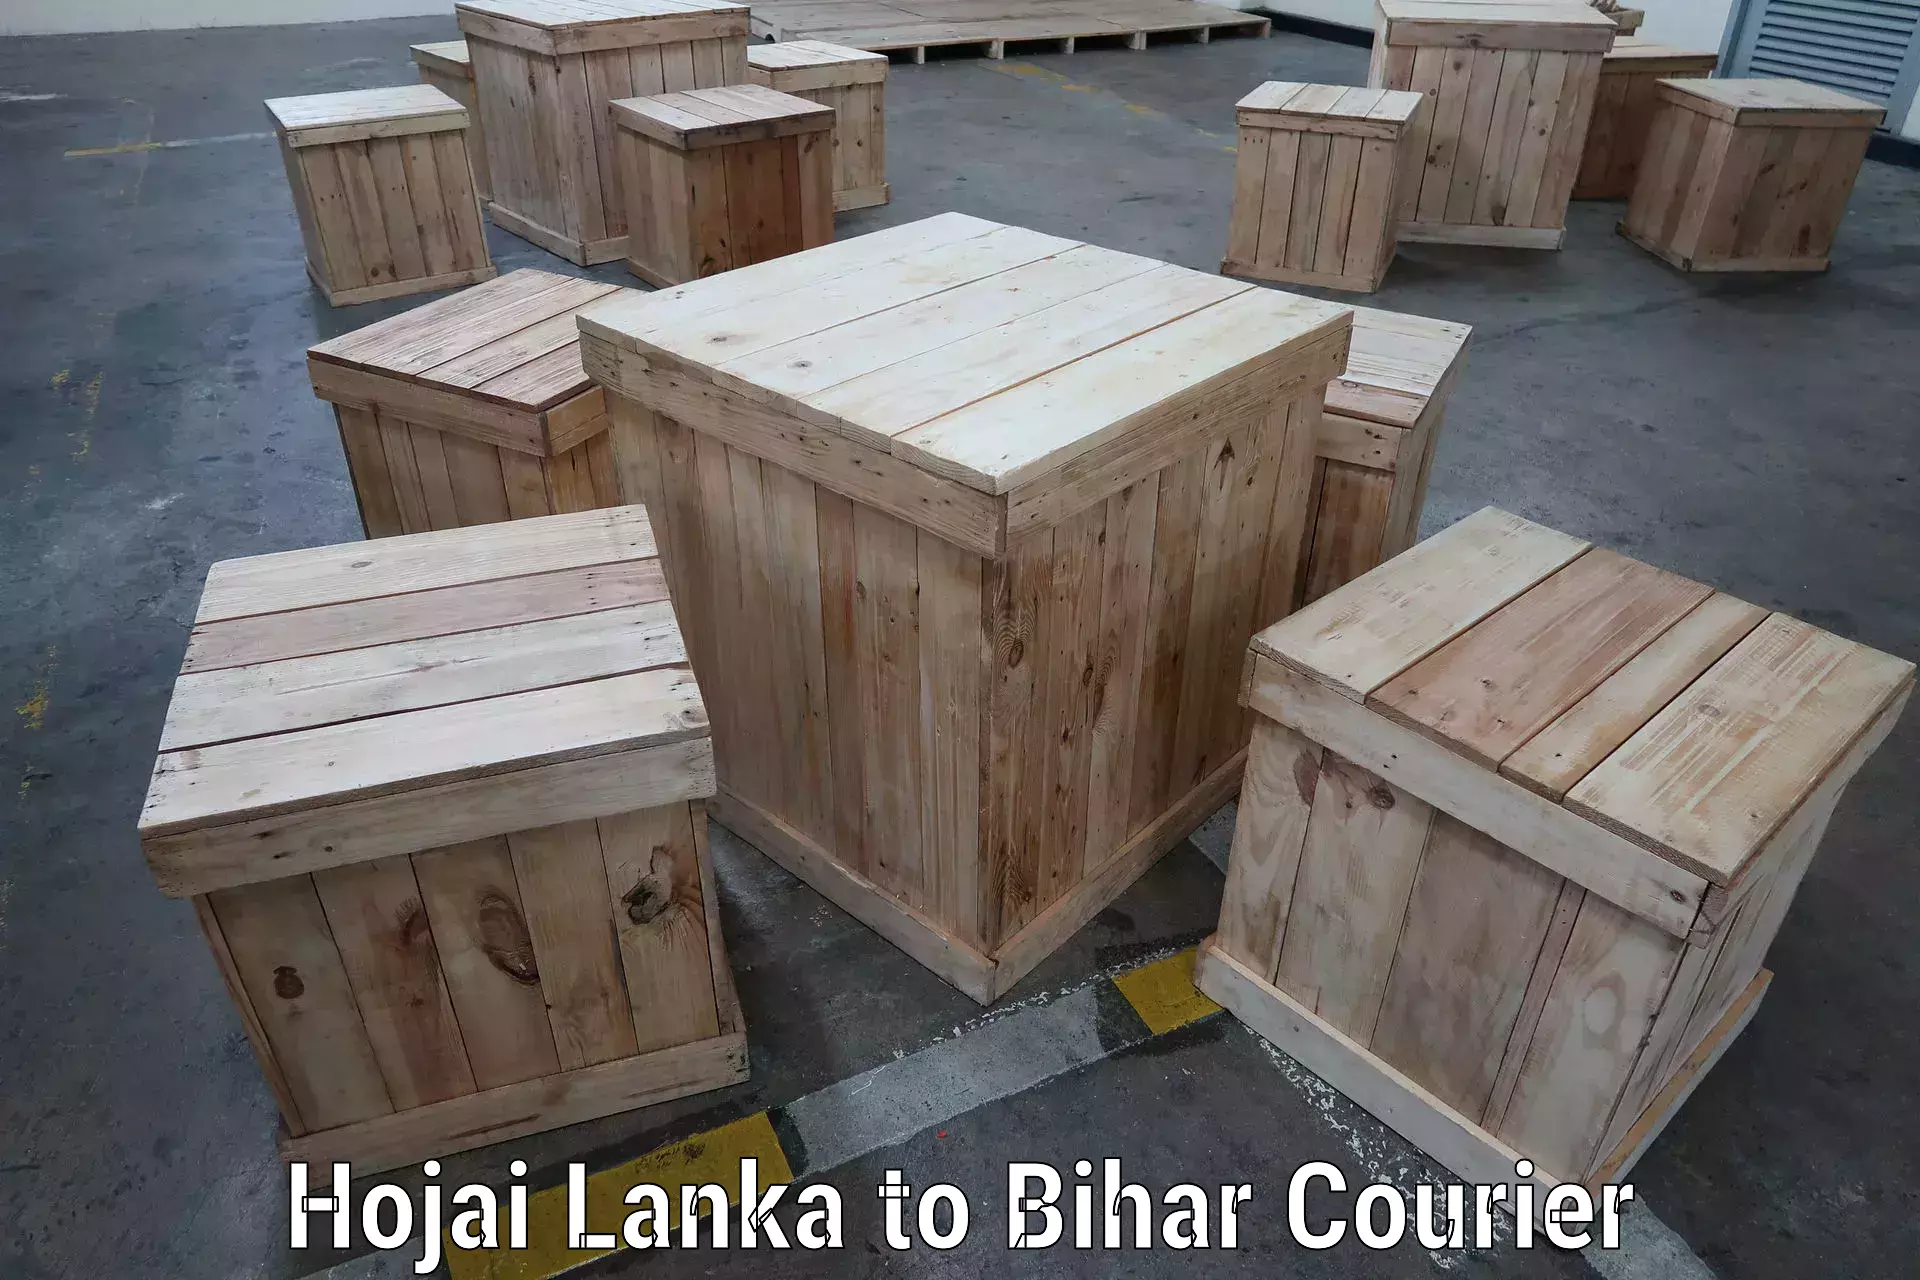 Courier service efficiency Hojai Lanka to Bihar